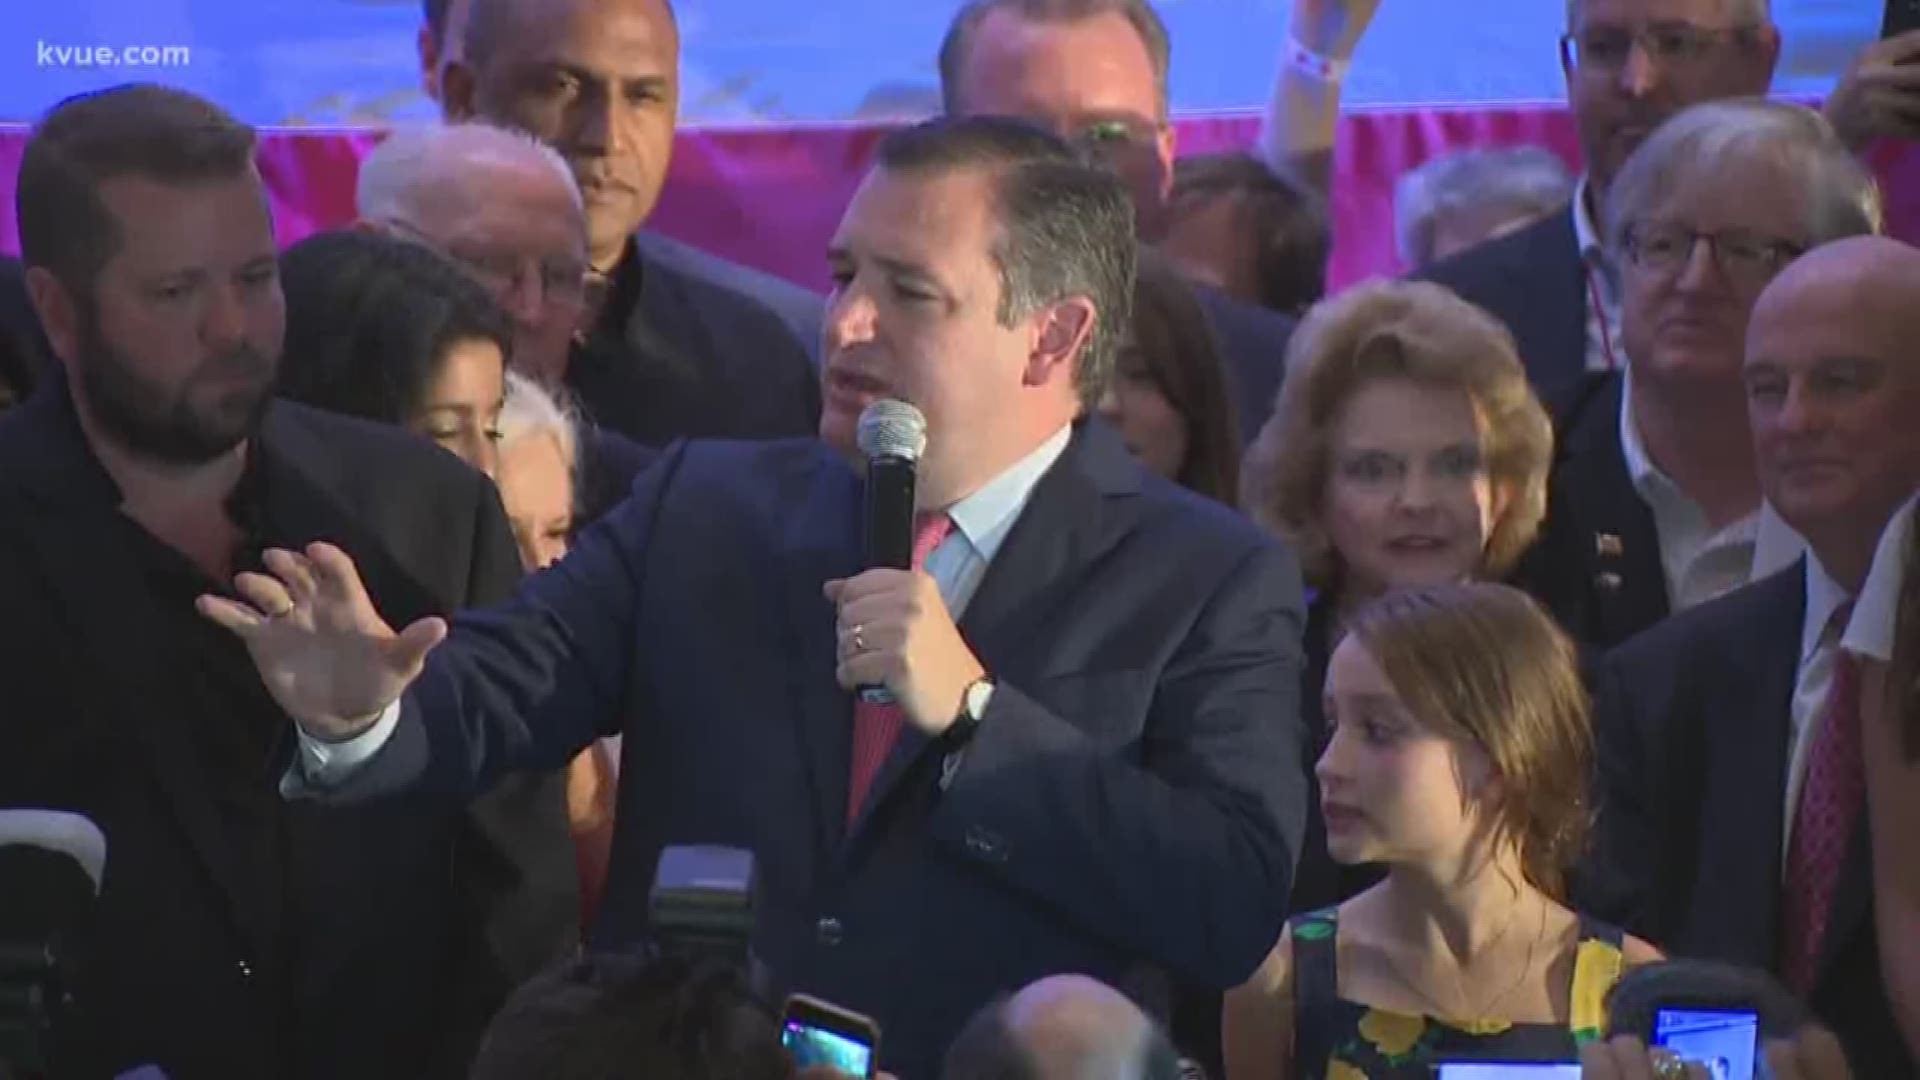 Sen. Ted Cruz speaks in Houston after winning the U.S. Senate race against Beto O'Rourke.